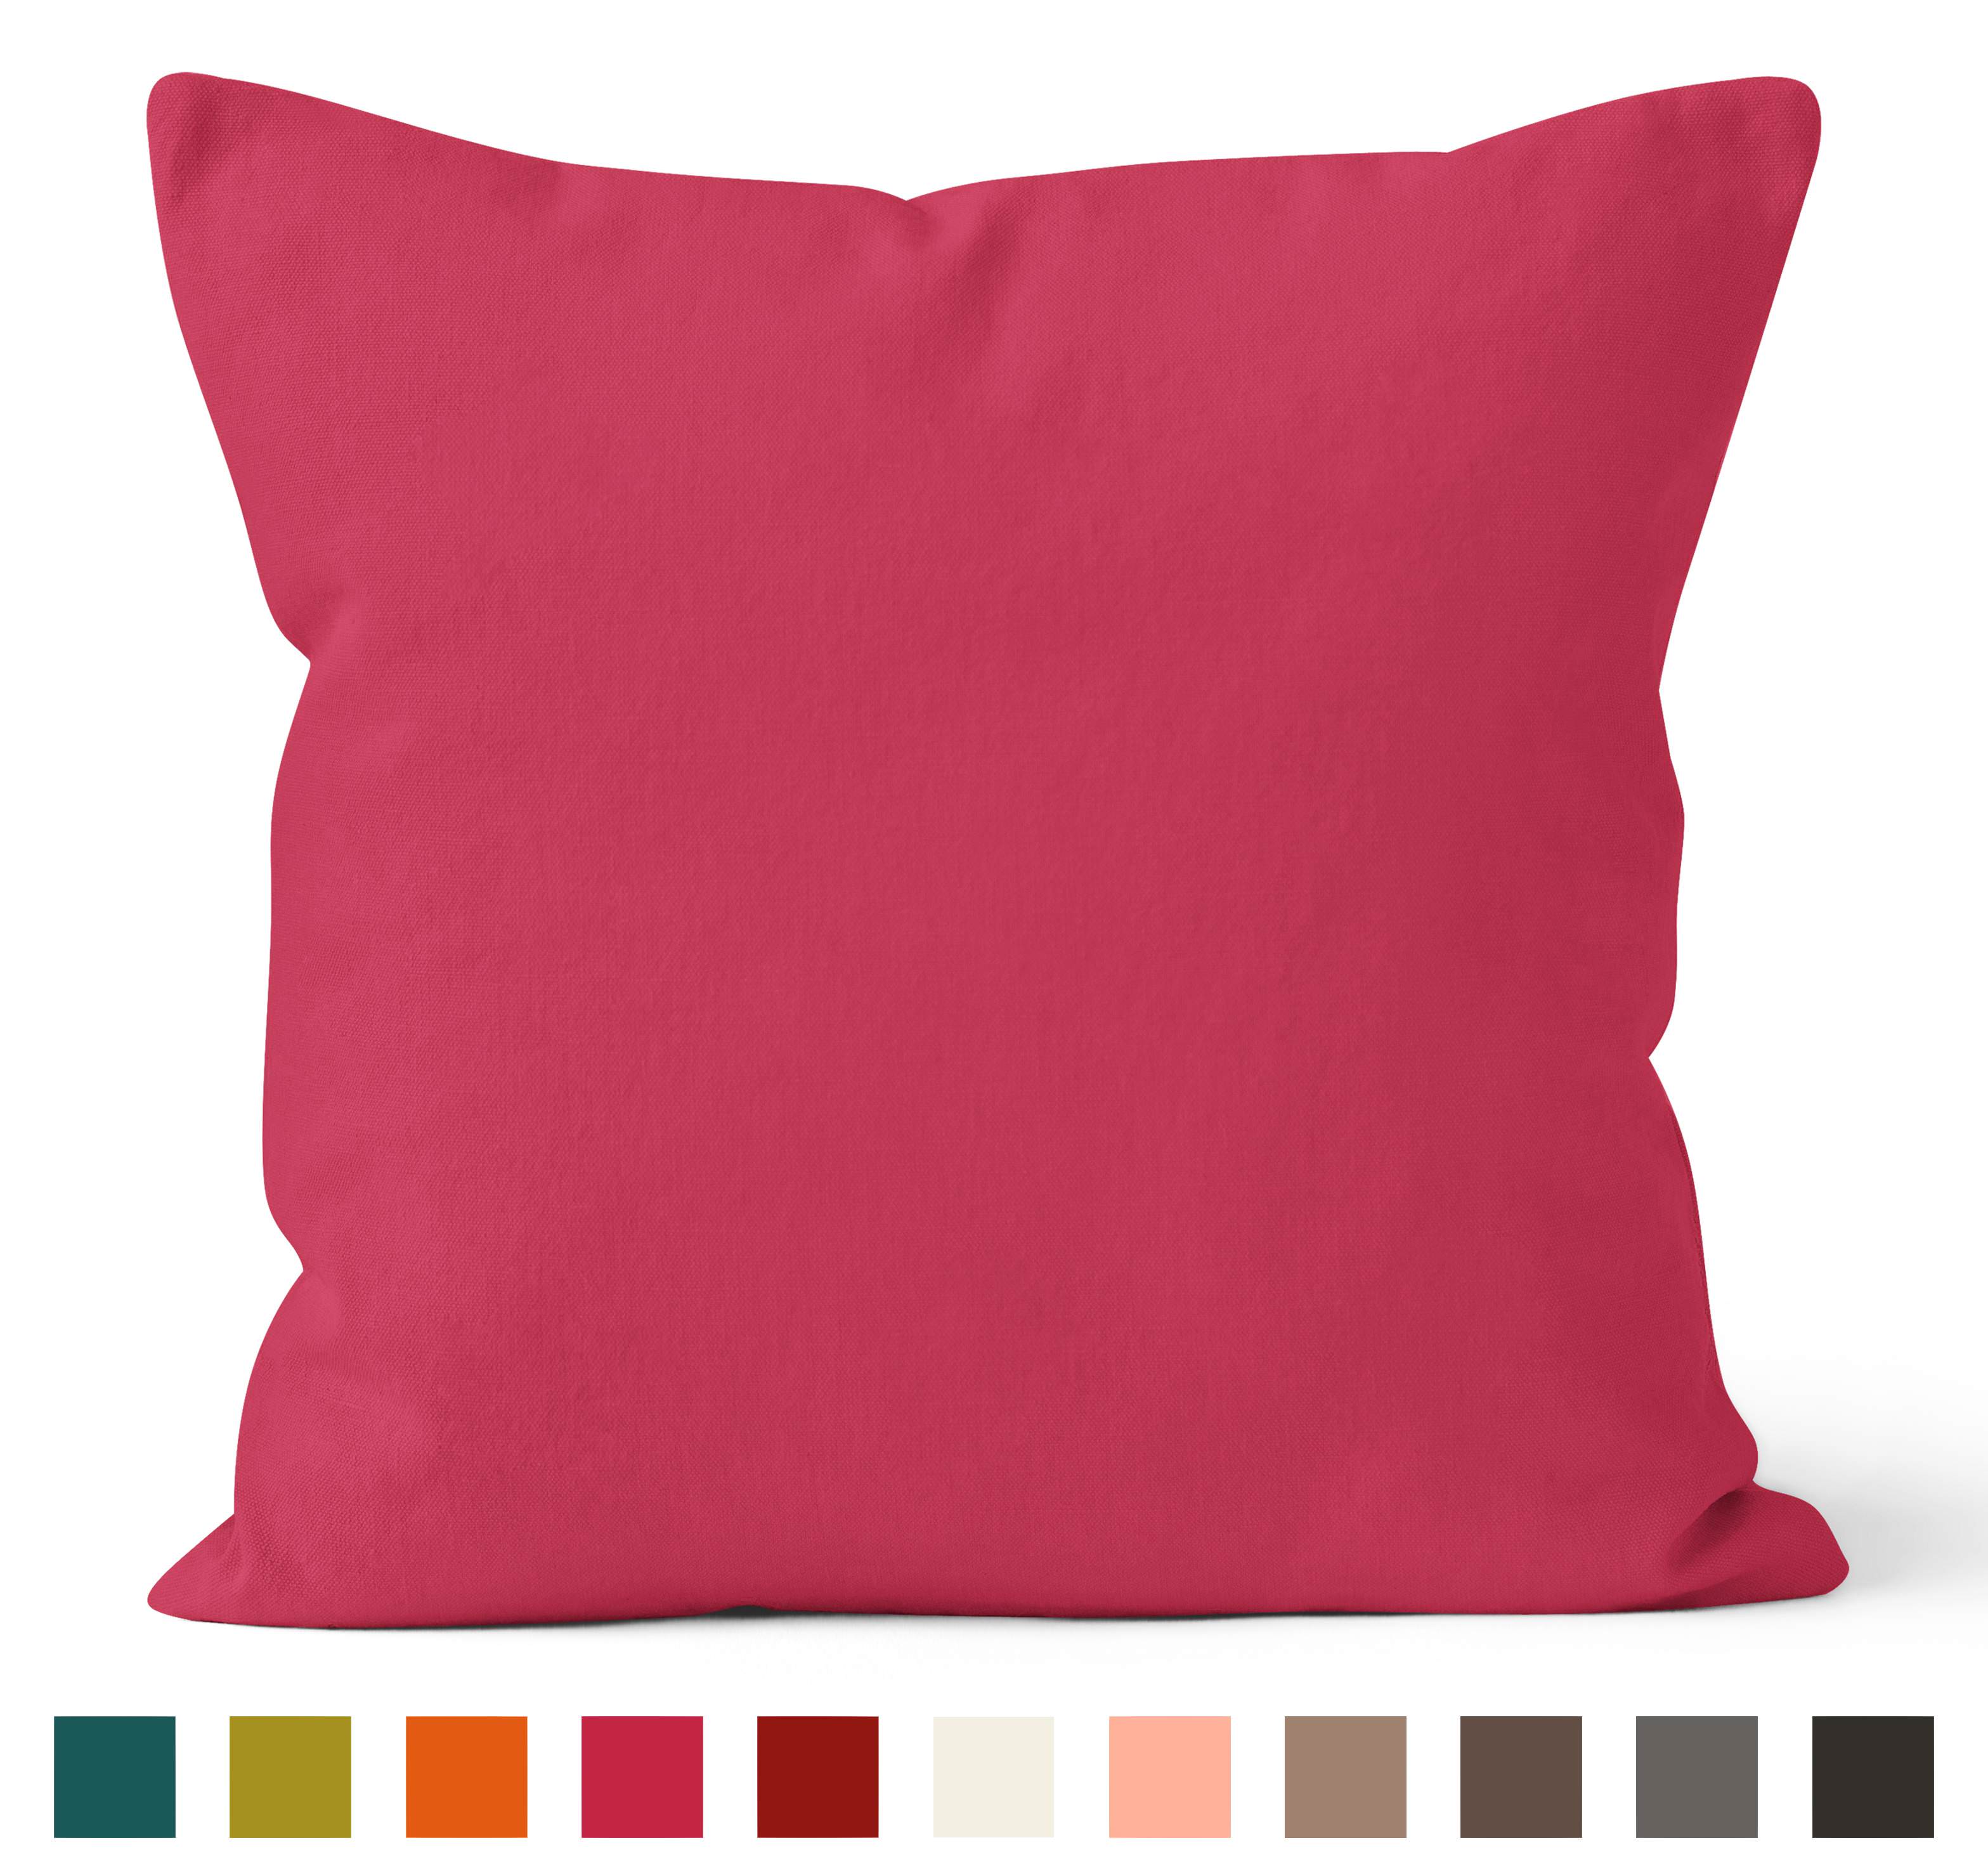 Encasa Homes Dyed Cotton Canvas Filled Cushion - 40x40 cm, Fuchsia Pink